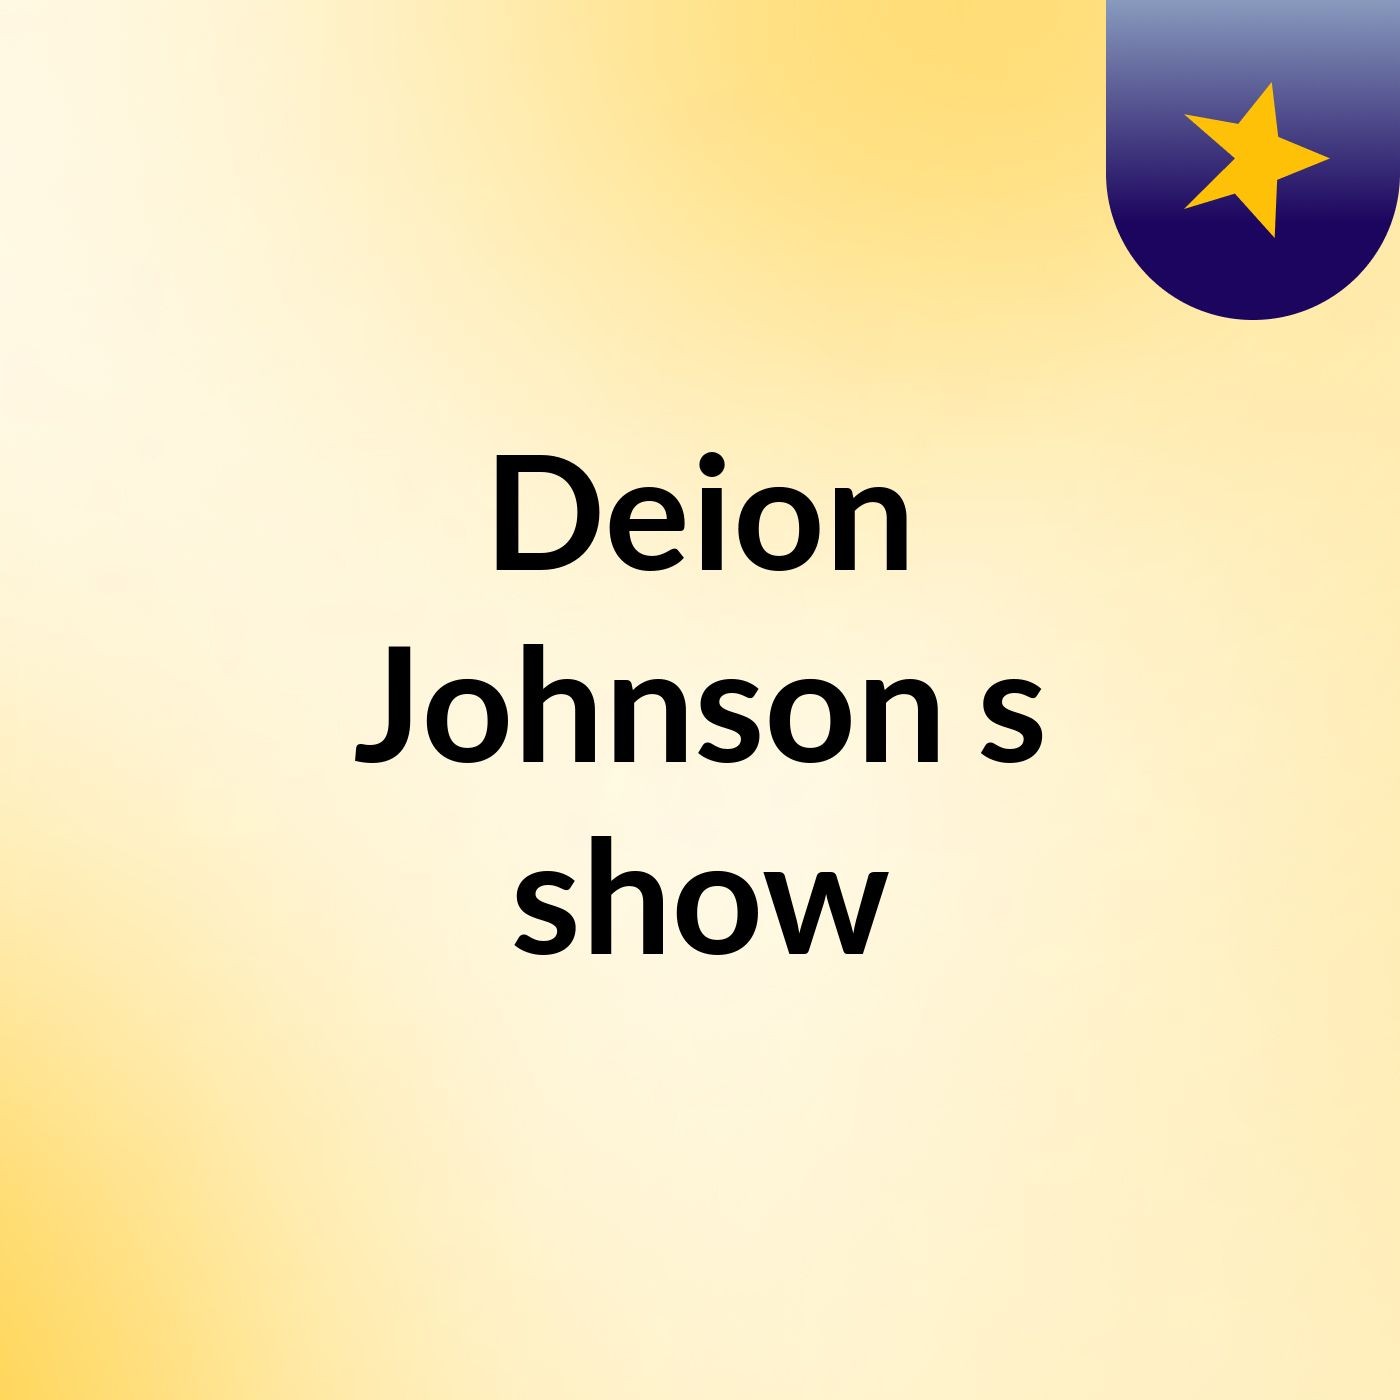 Deion Johnson's show